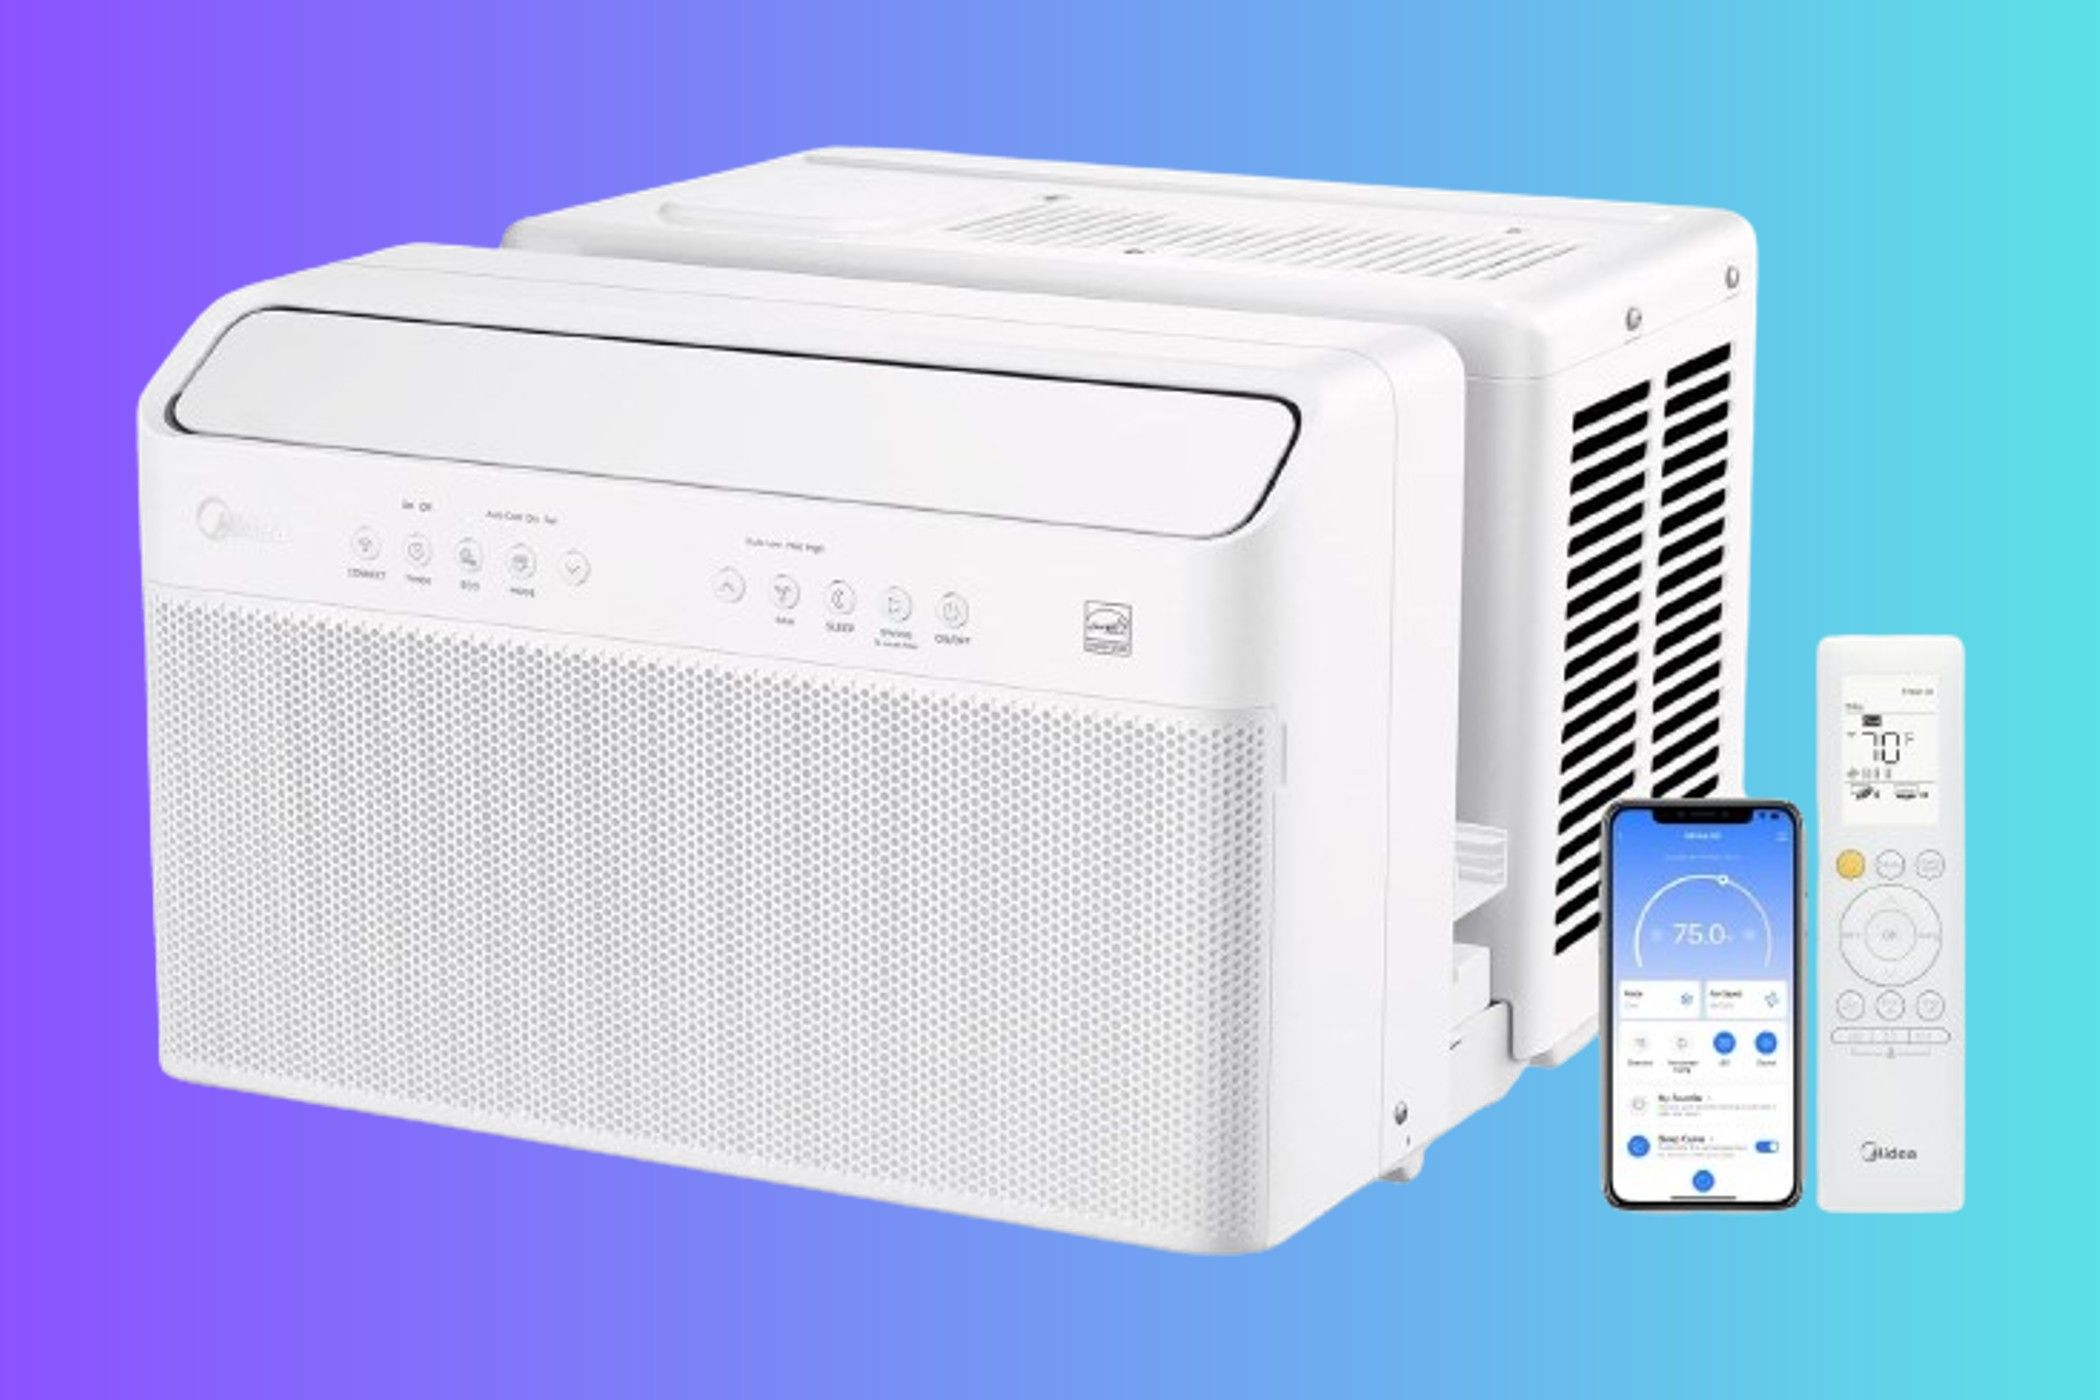 Midea U-Shaped Smart Inverter Window Air Conditioner on gradient background